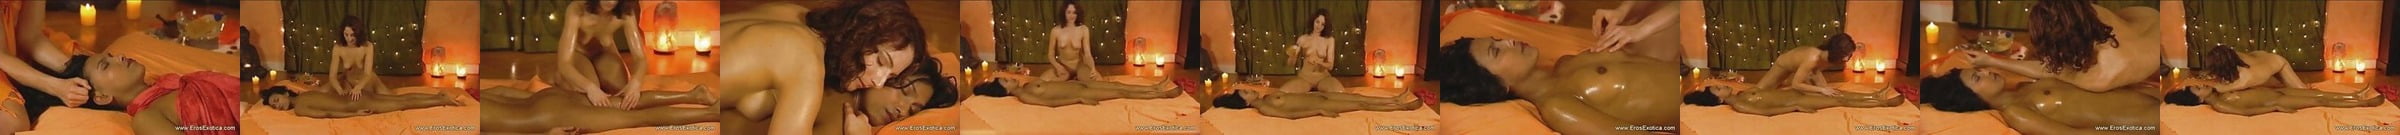 Tantric Massage Porn Videos Xhamster